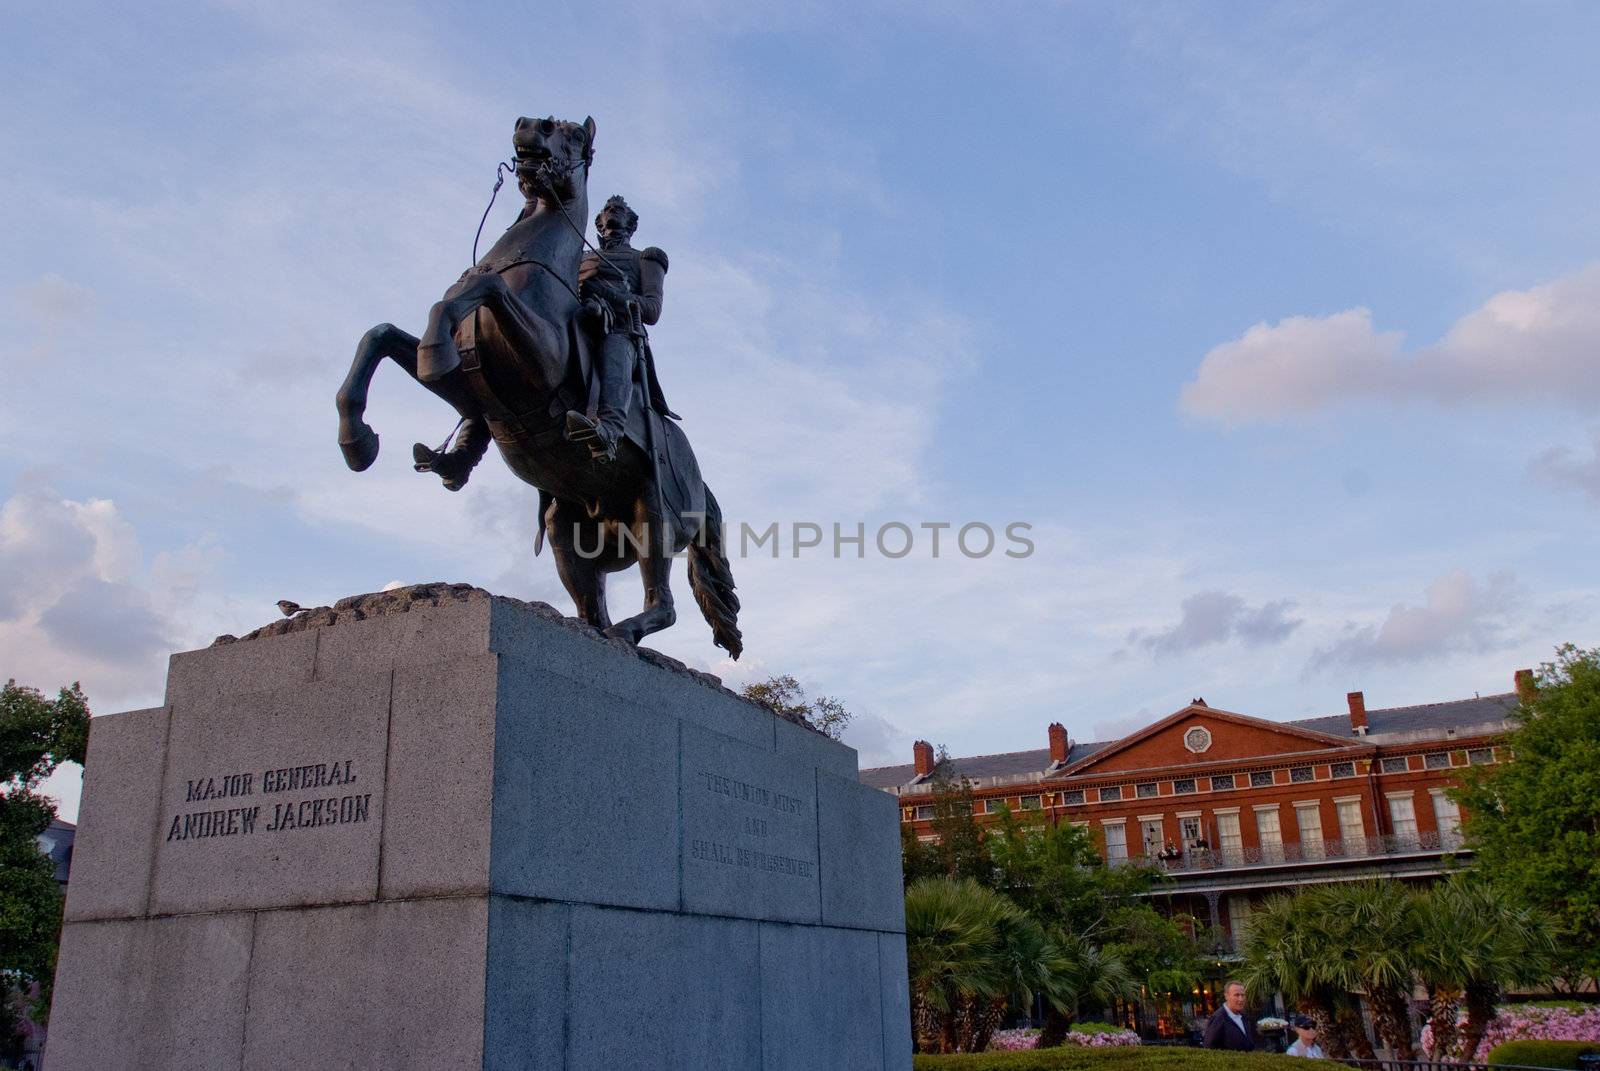 Andrew Jackson statue by edan